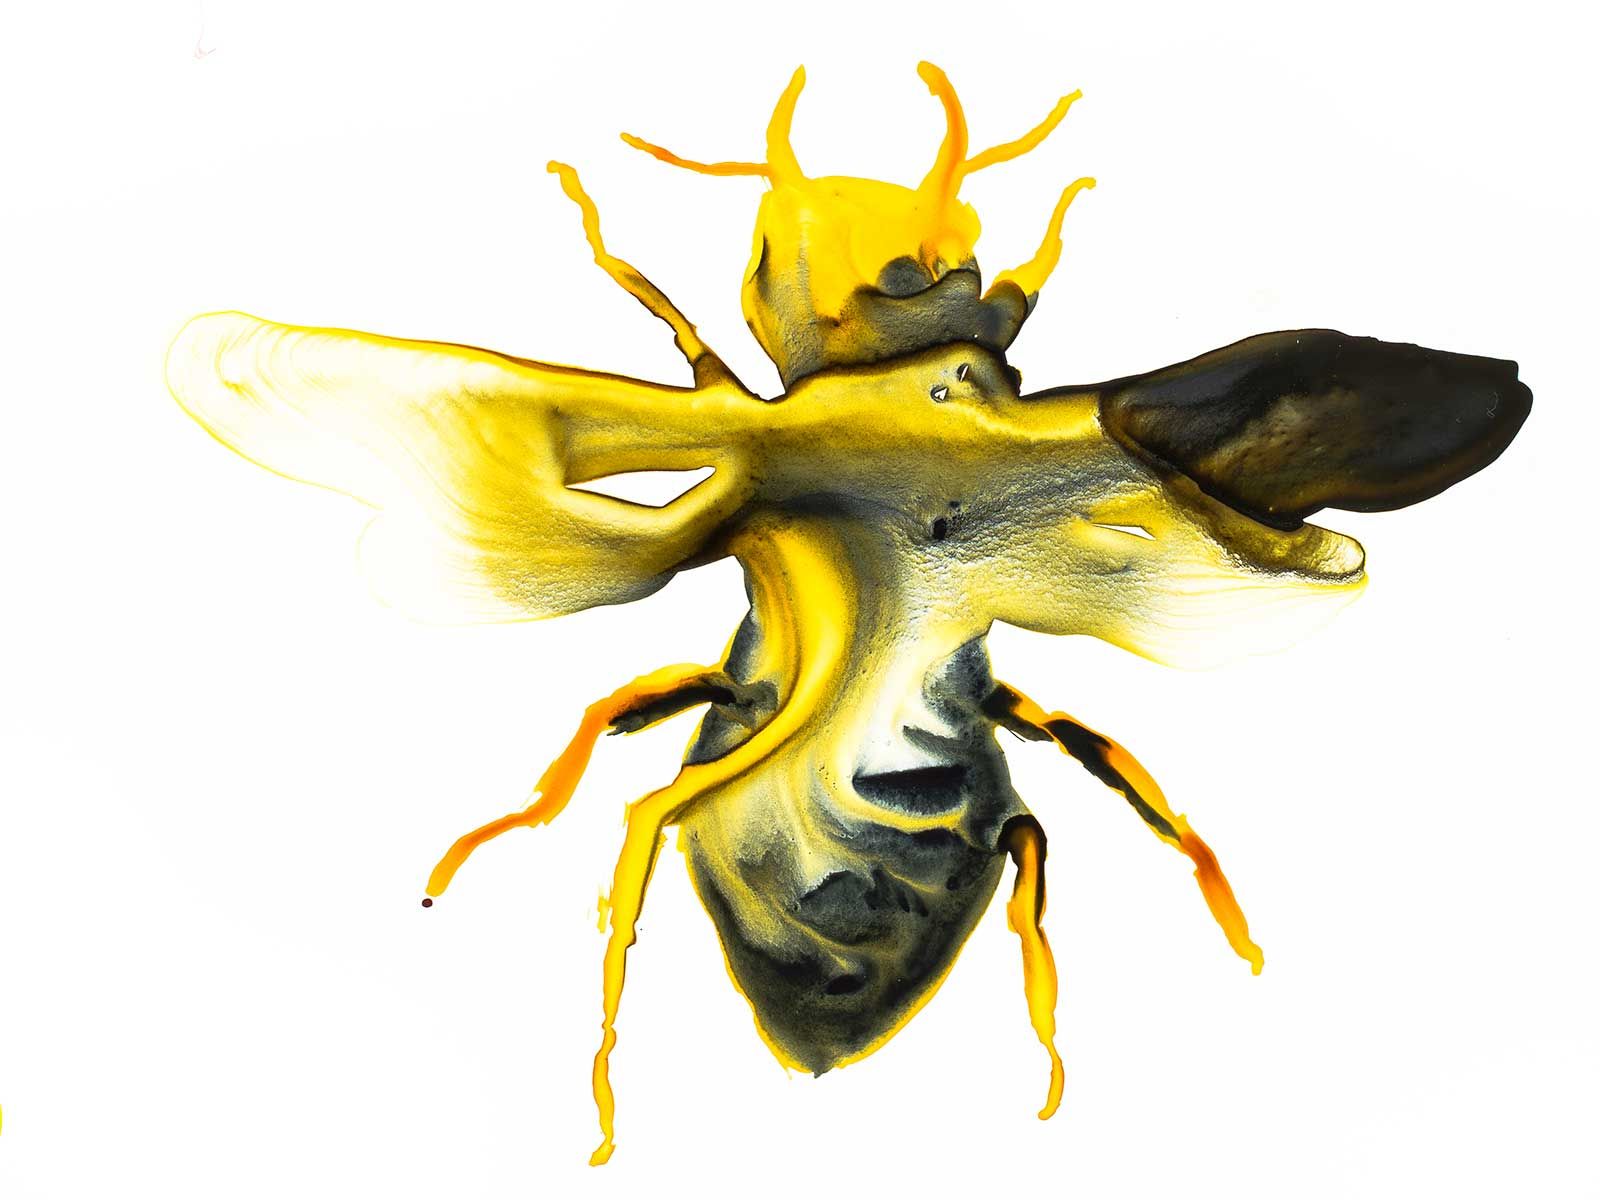 World's Smallest, Largest, and Weirdest Bee Species - The Best